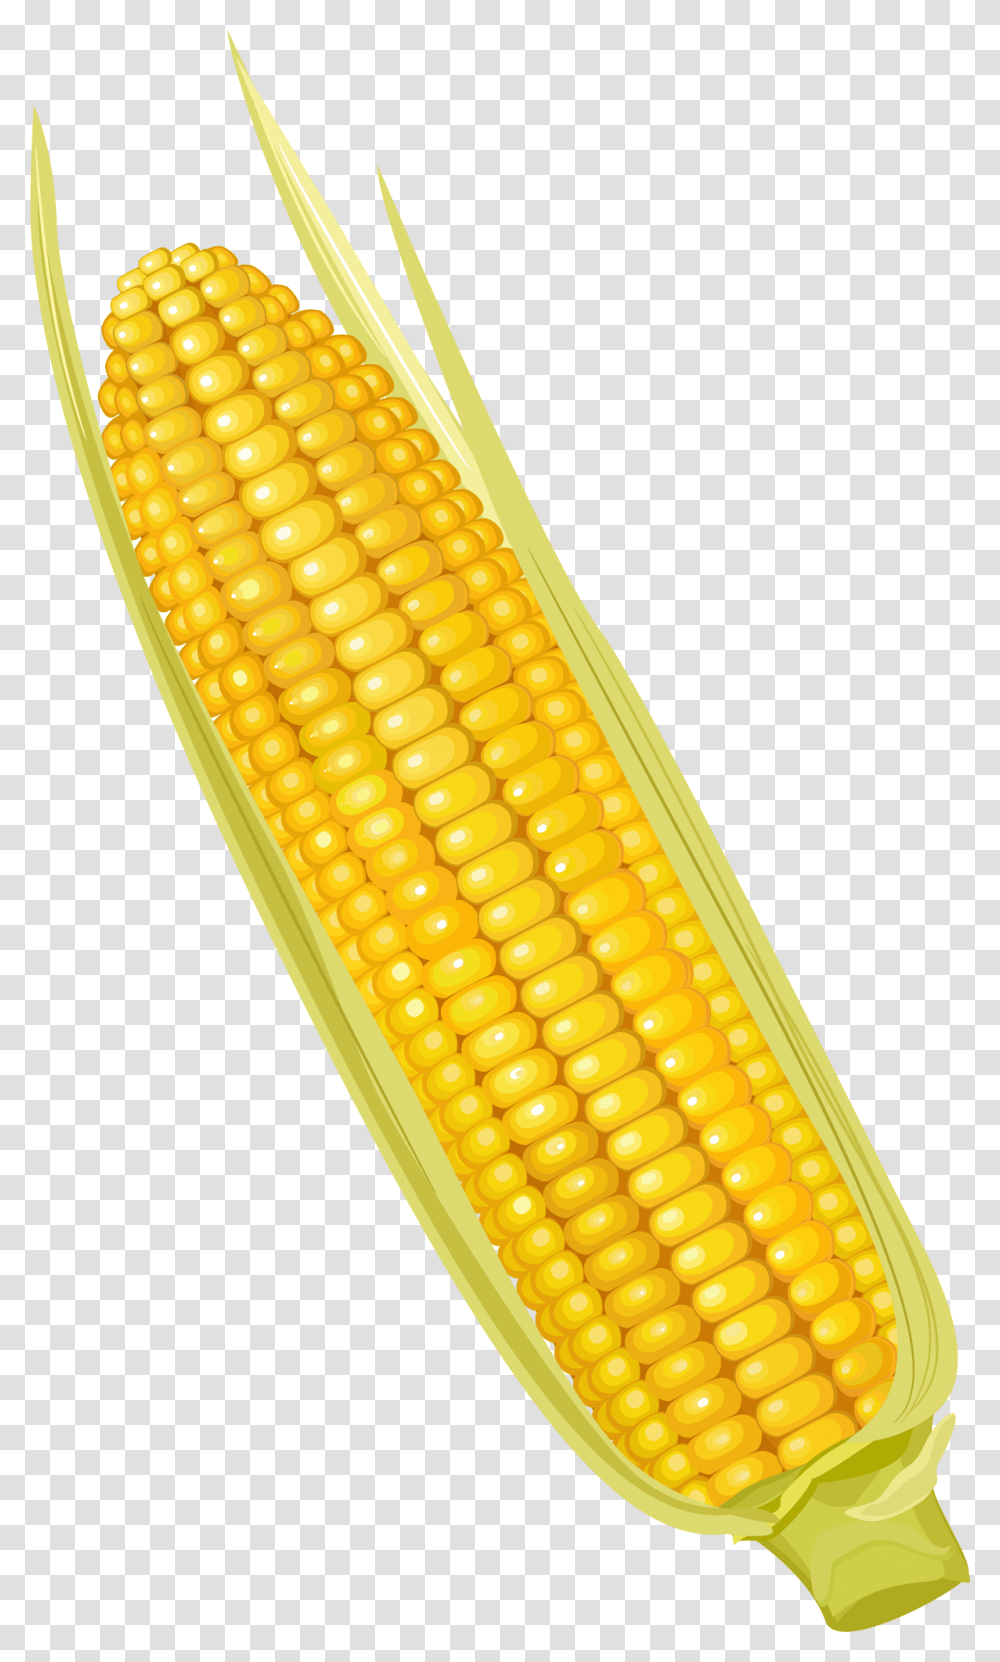 Corn On The Cob Maize Corncob Vegetable Yellow Corn Clipart, Plant, Food Transparent Png